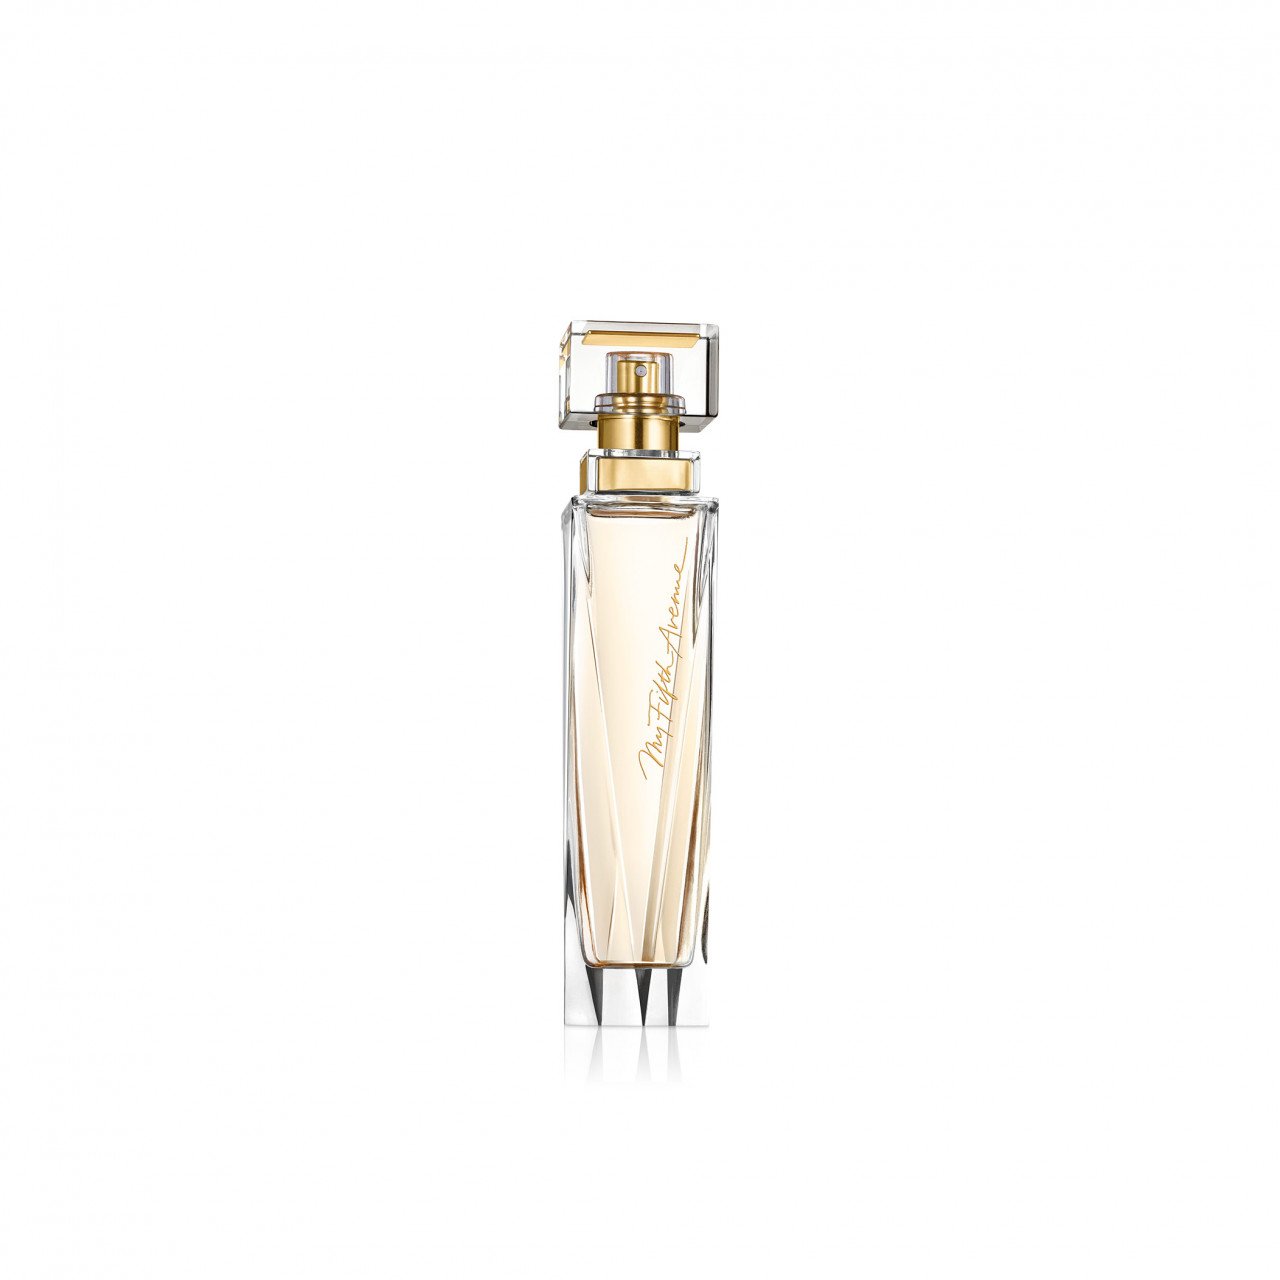 Elizabeth Arden - My 5Th Avenue Eau de Parfum -  30 ml